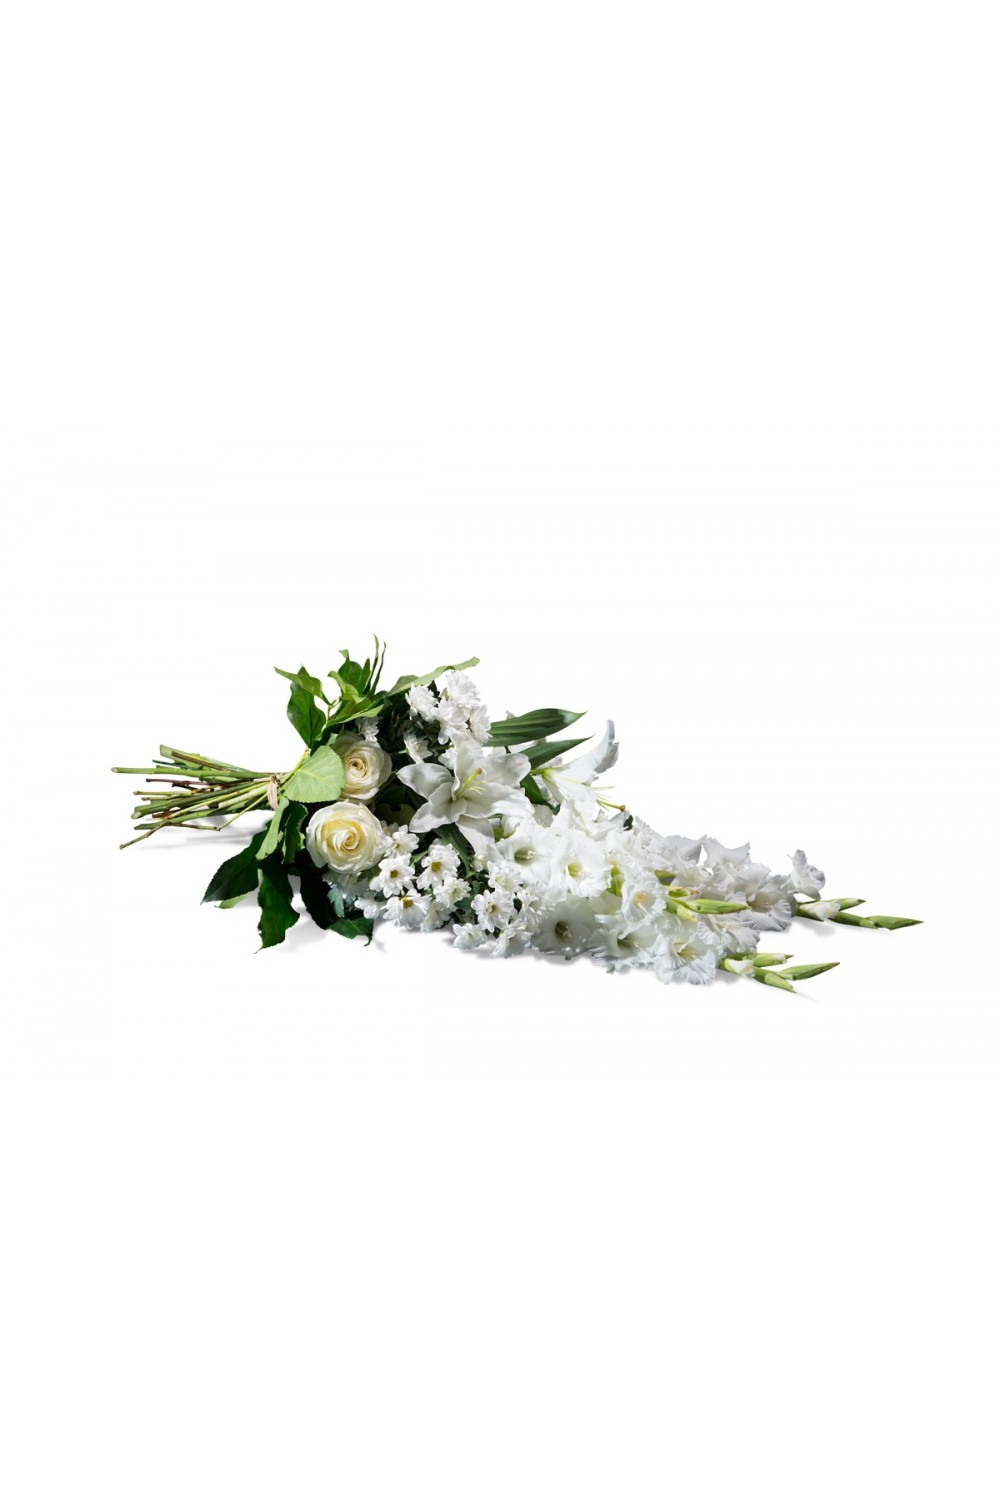 Funeral - Ramo Horizontal em Tons de Branco | Interflora